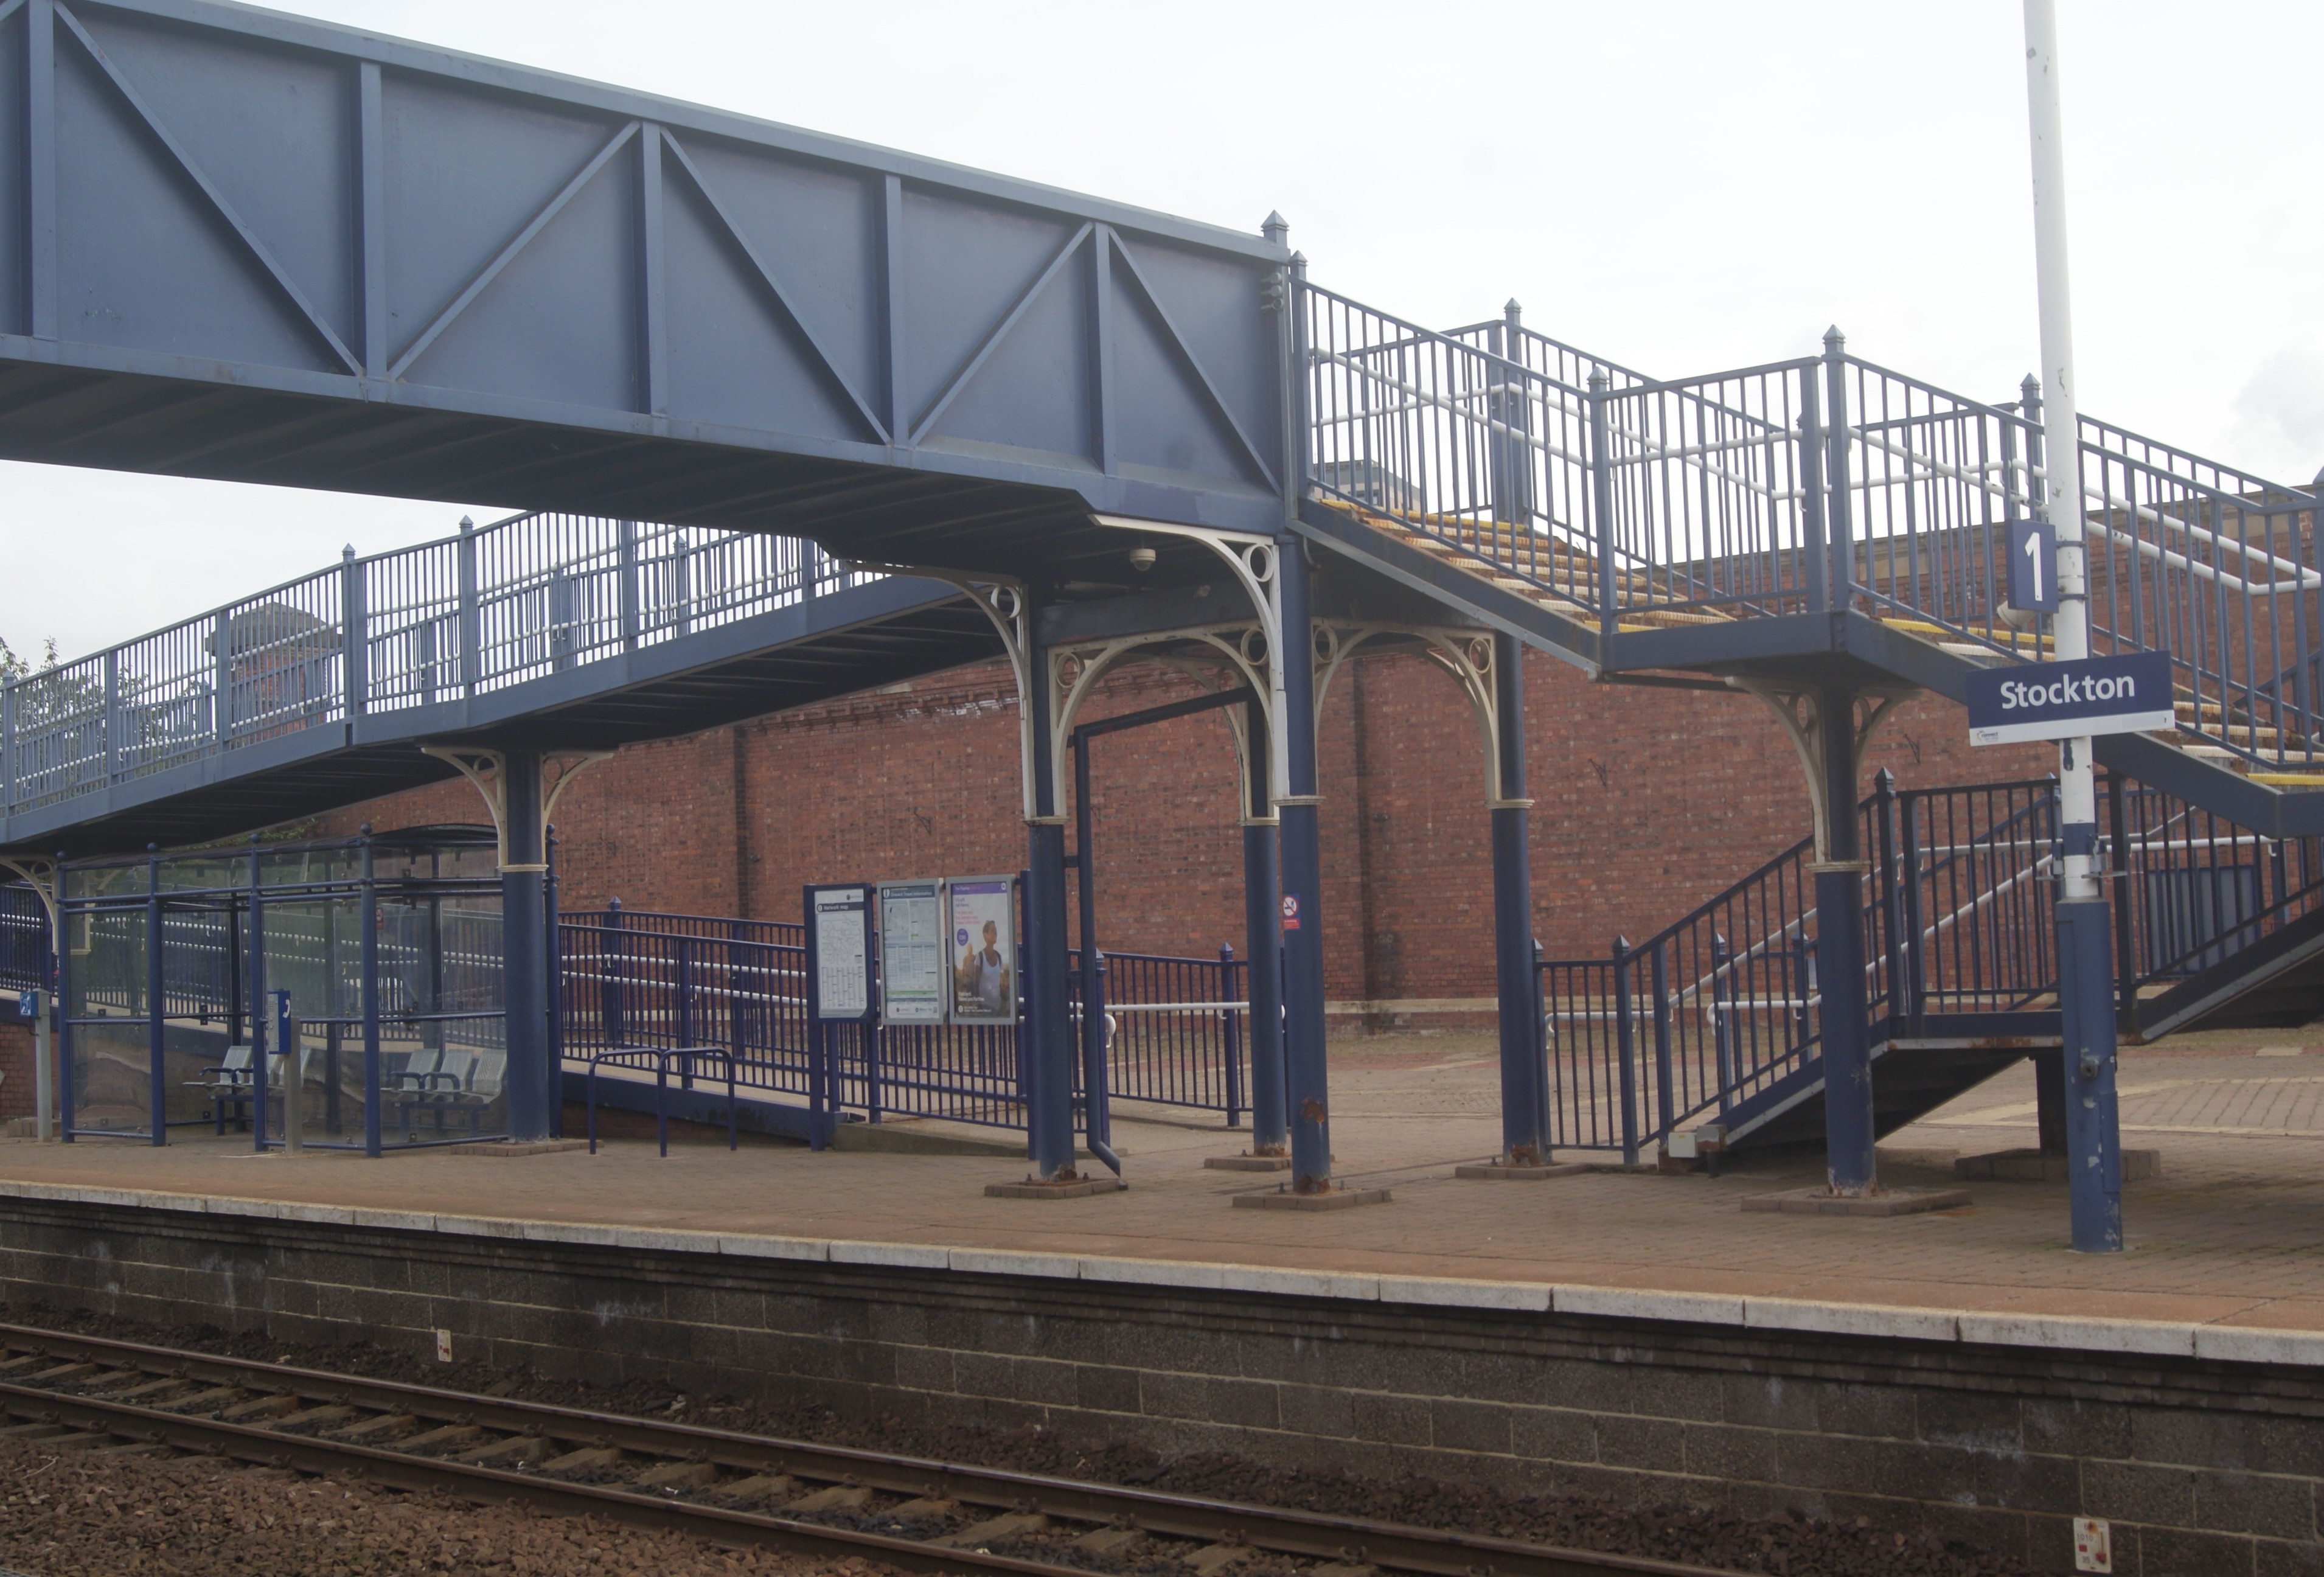 this-image-shows-a-platform-at-stockton-station